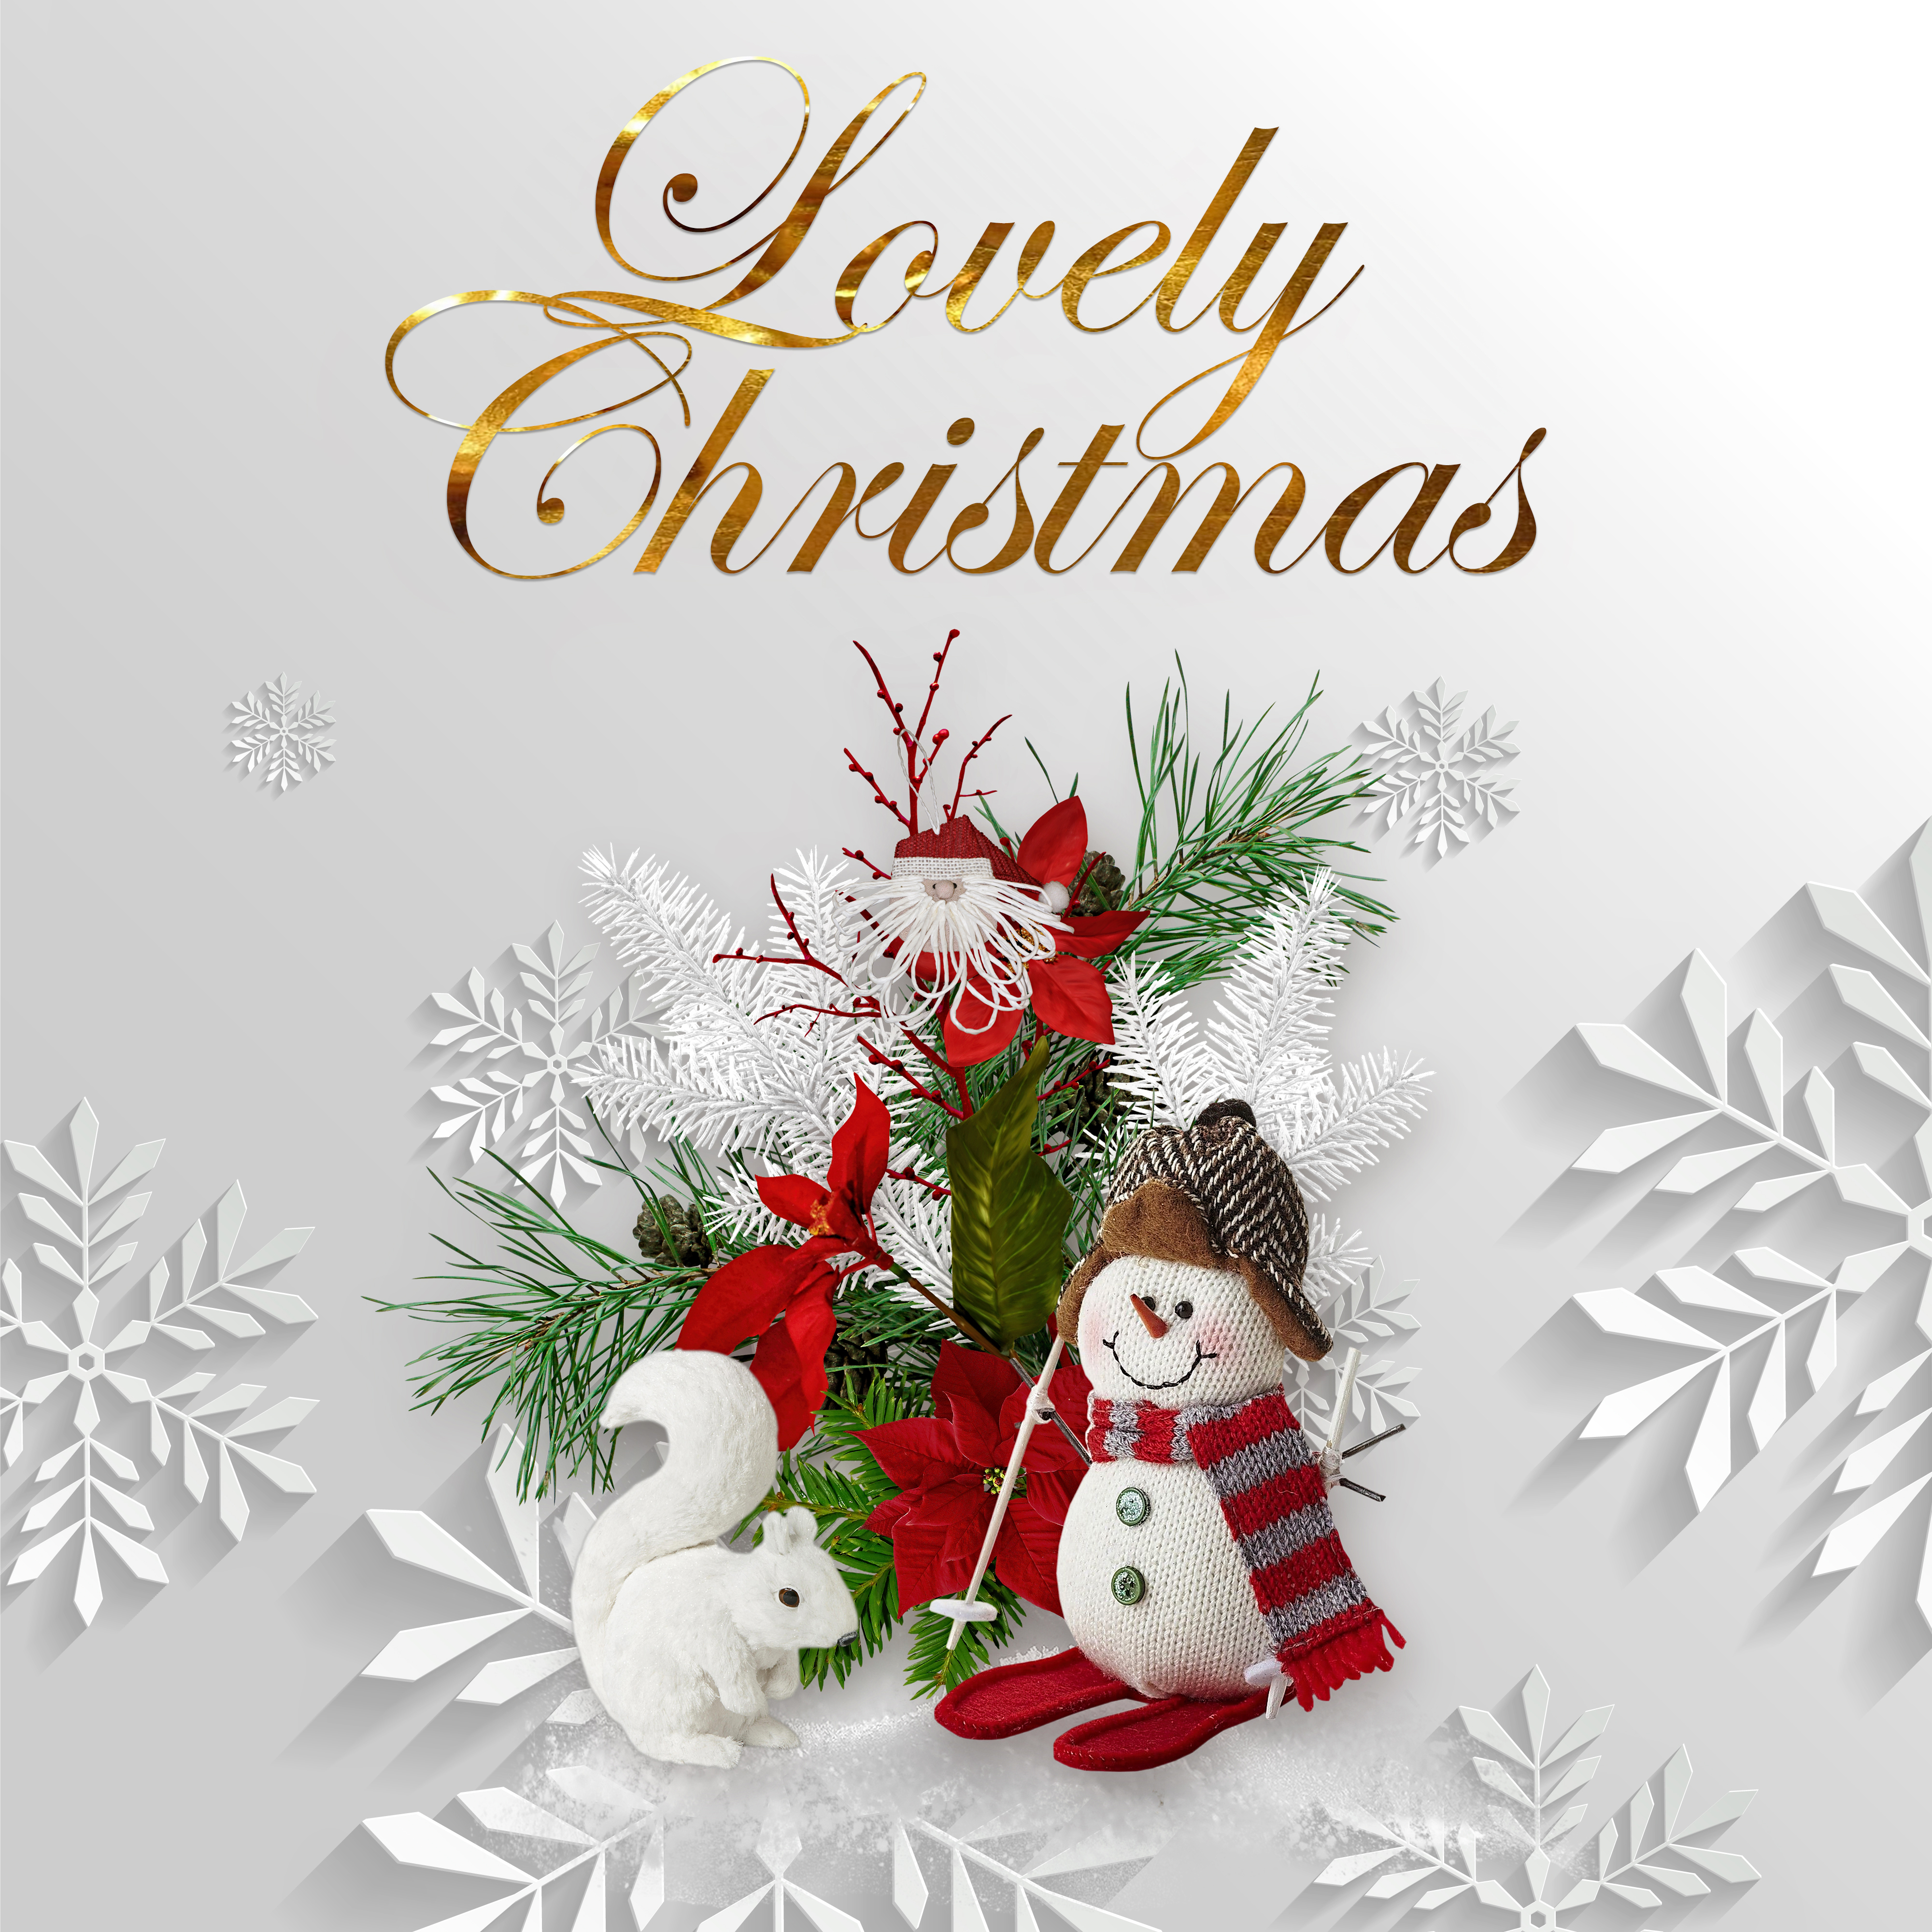 Lovely Christmas: The Sweet Sounds of Christmas - Christmas Healing, Catholic Christmas, Ambient Music, International Carols, Spirituality